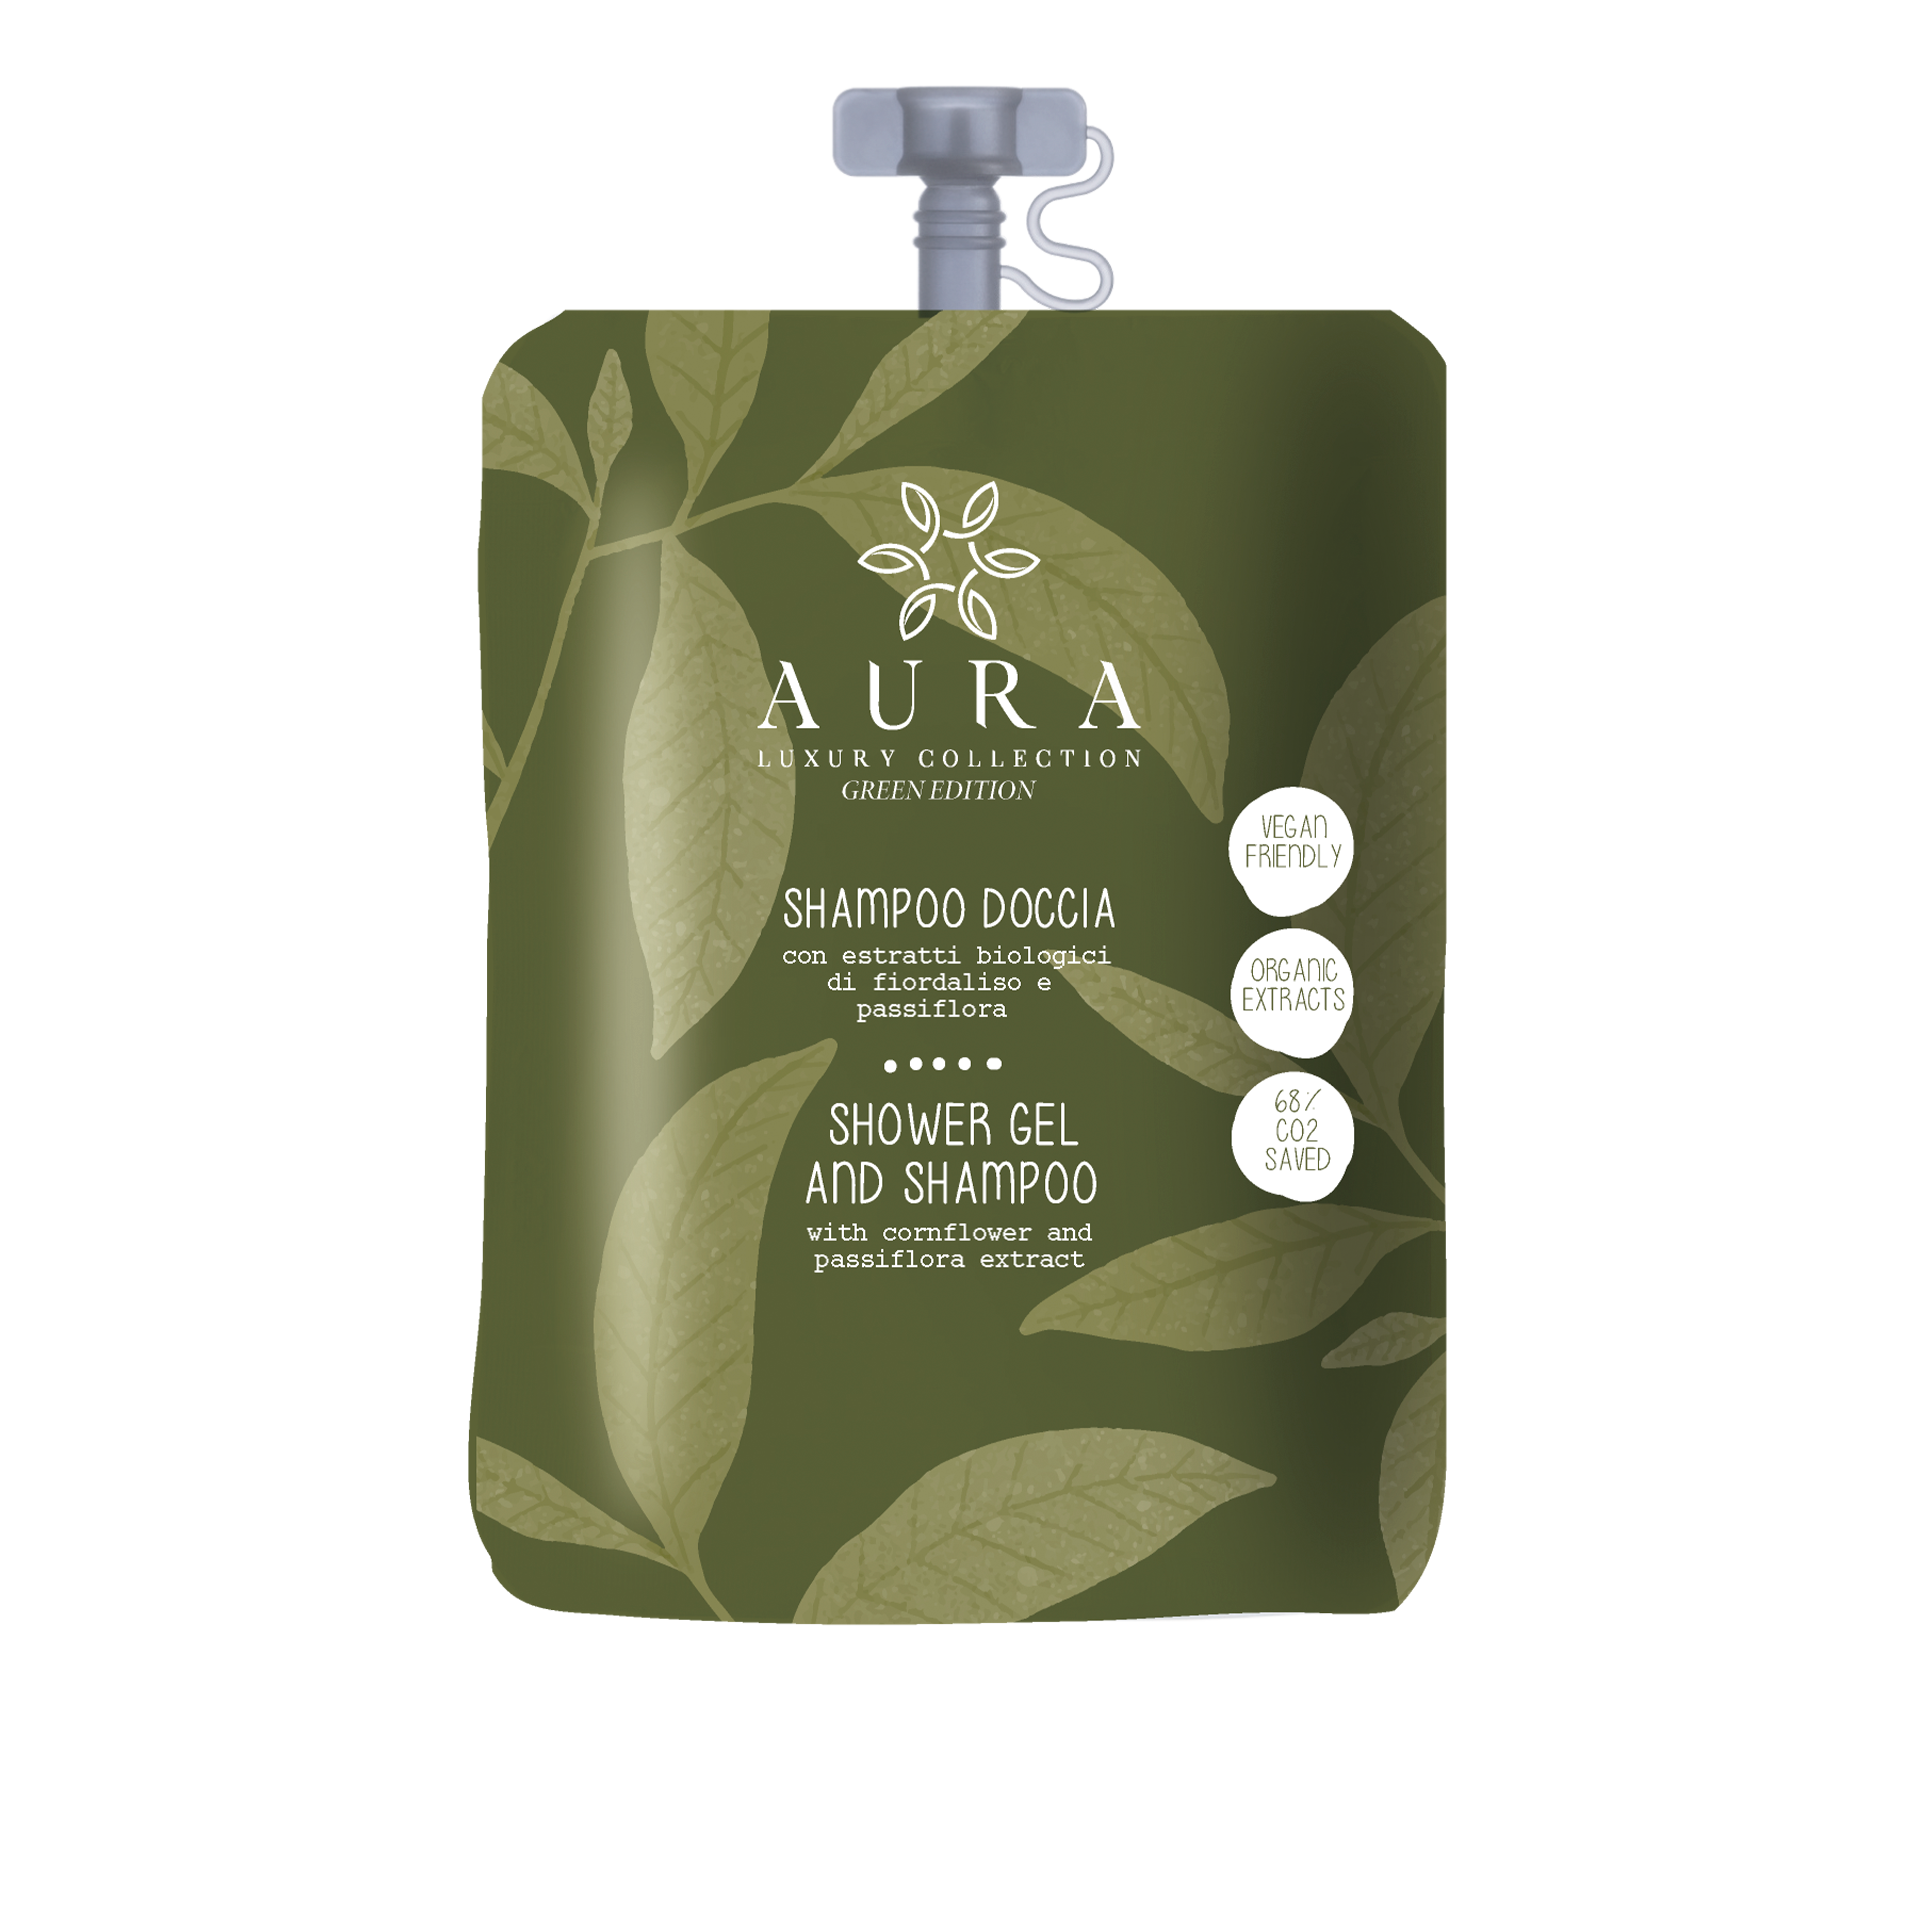 Kit Shampoo Doccia al fiordaliso e passiflora Aura Luxury Collection